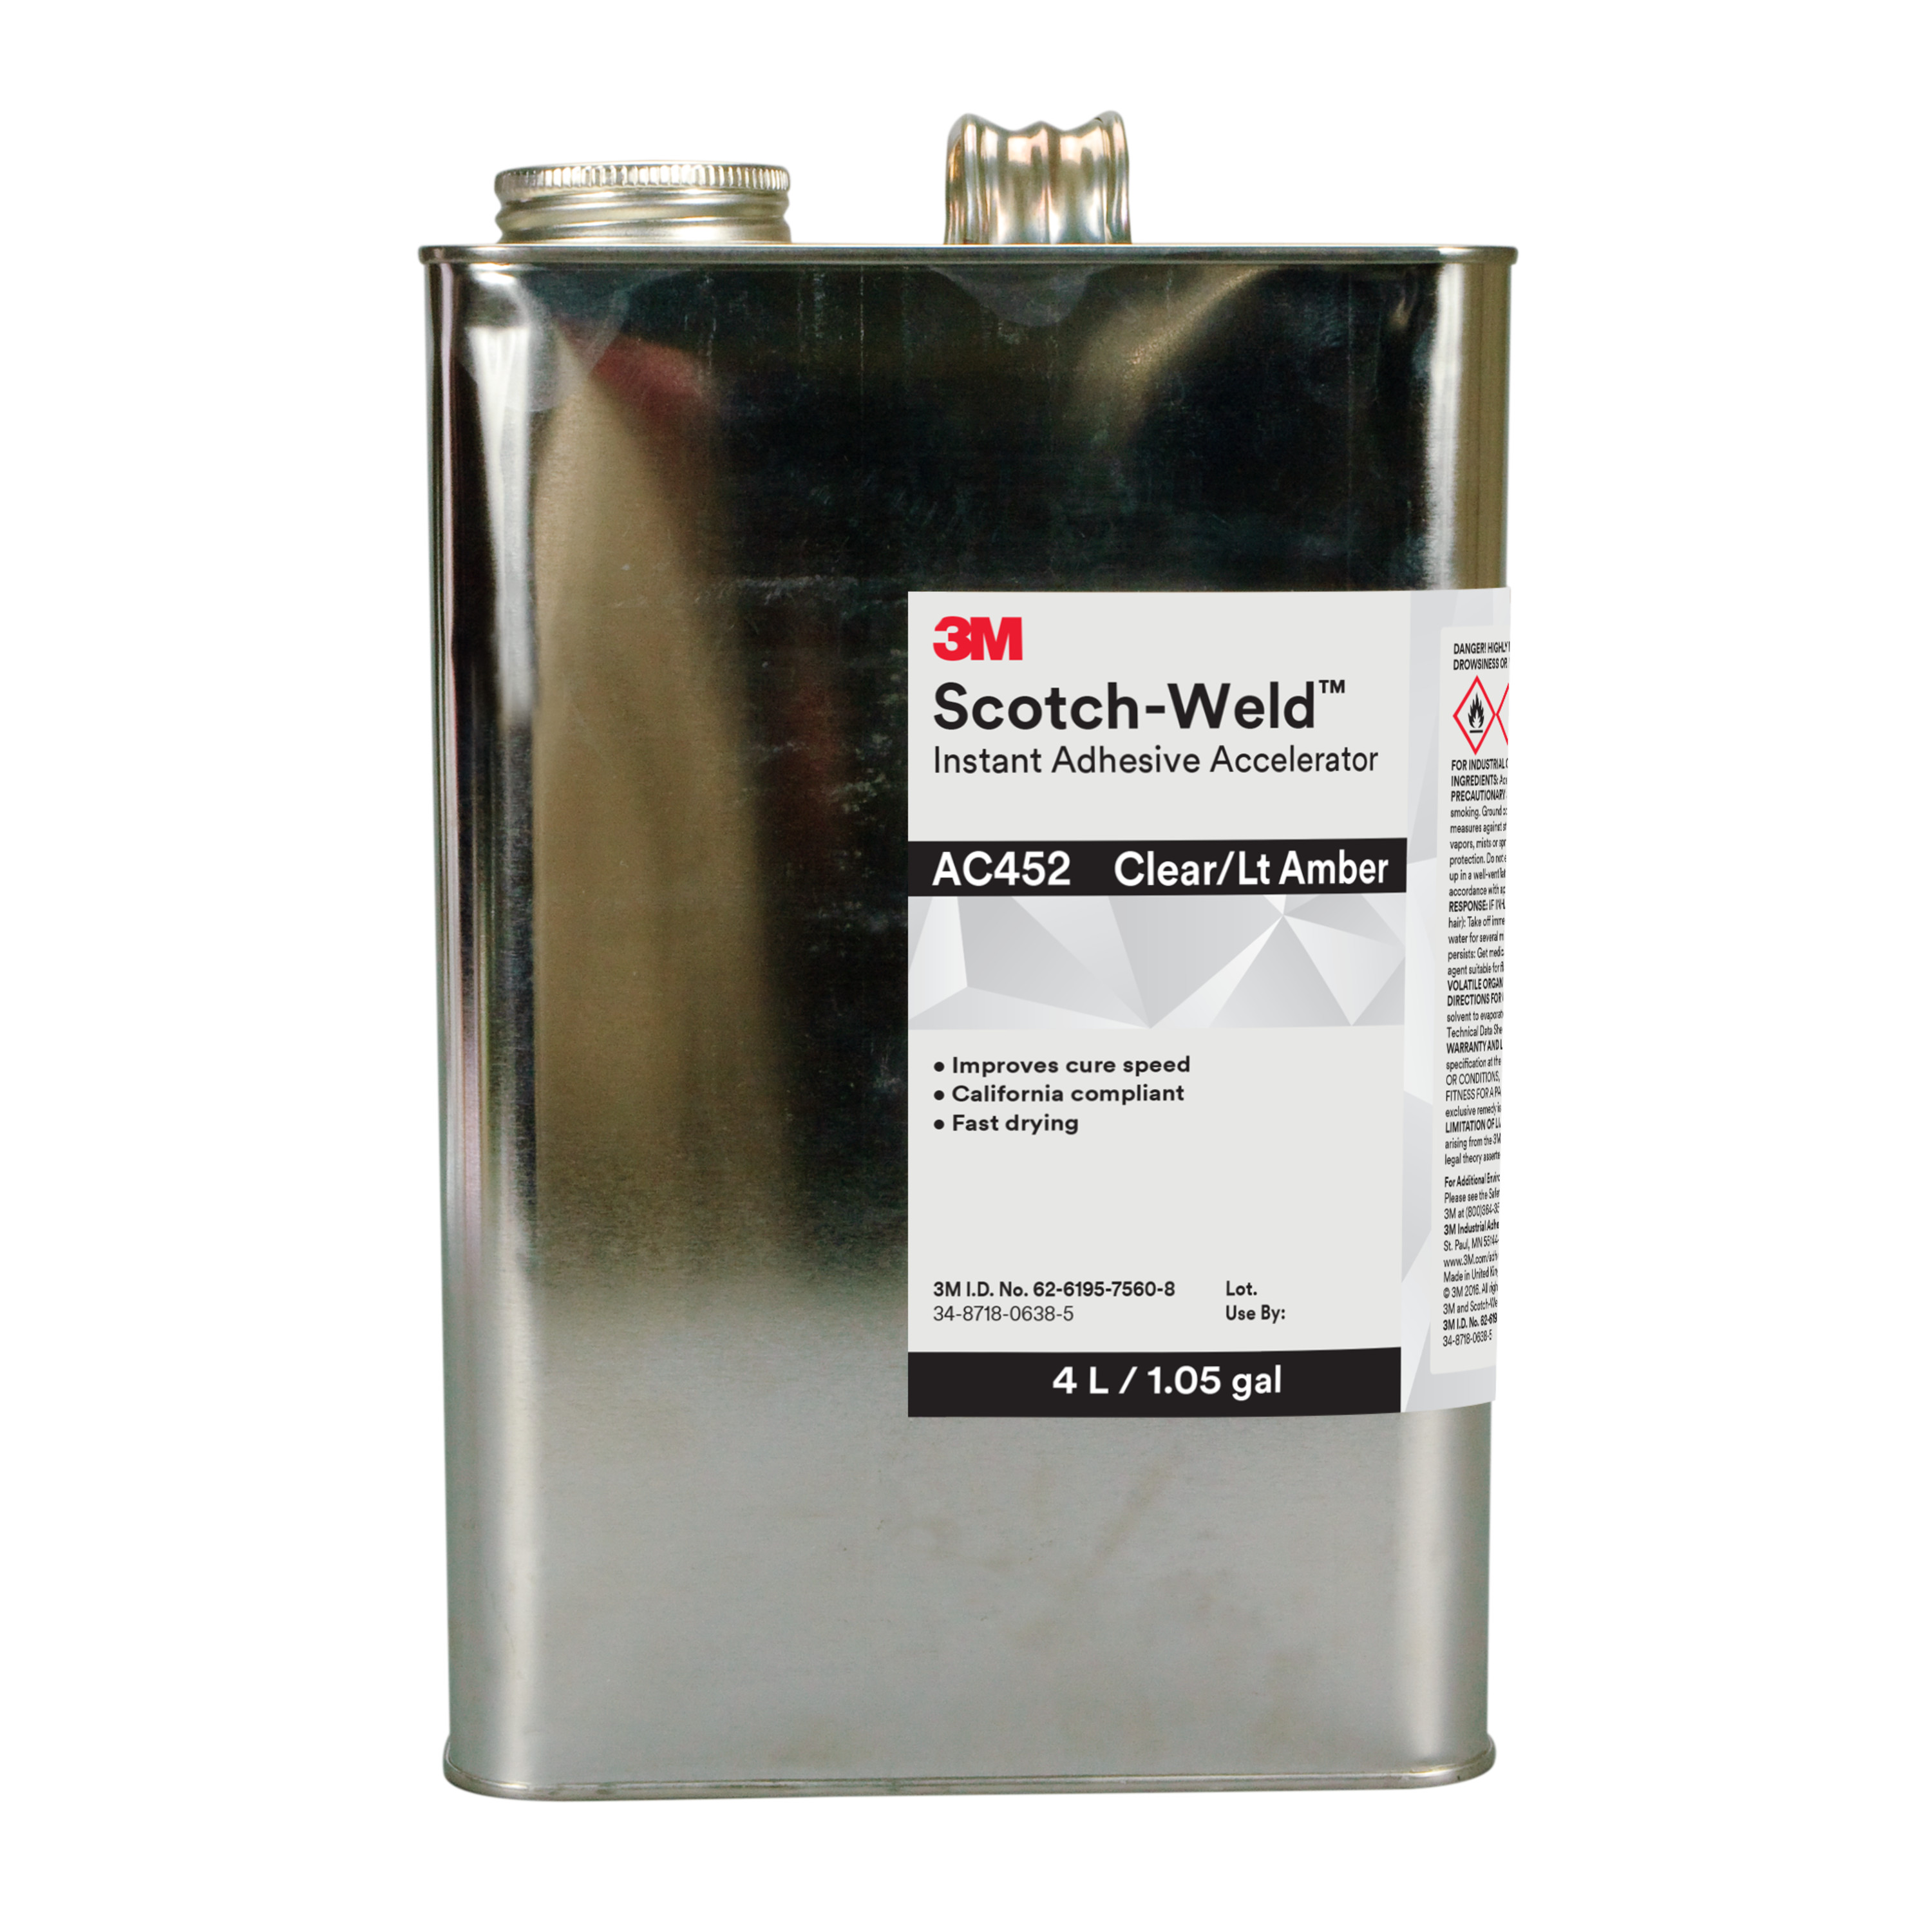 3M™ Scotch-Weld™ Instant Adhesive Accelerator AC452, Amber, 4 L Can,
1/Case